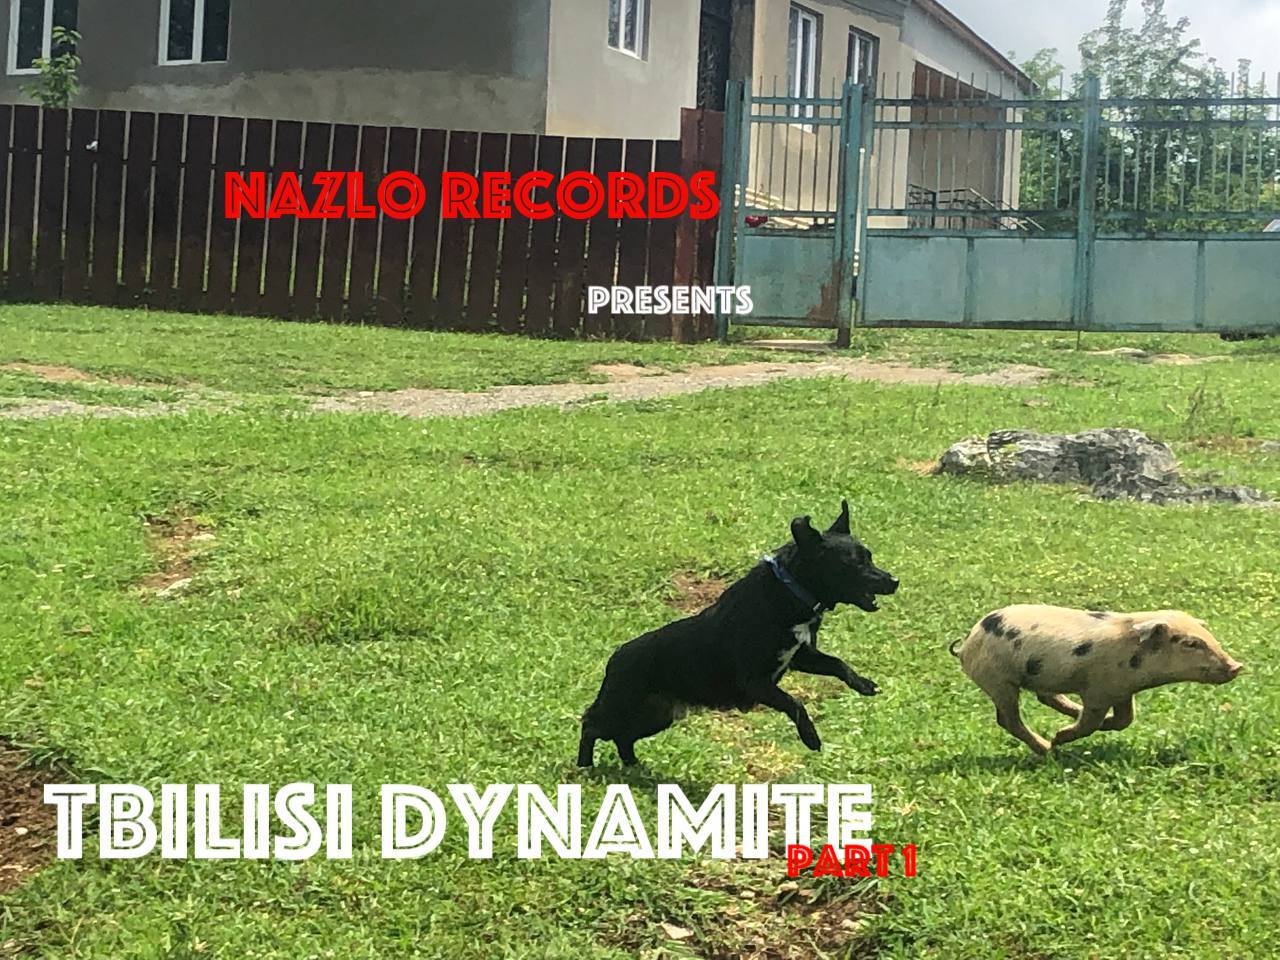 Nazlo Records presents Tbilisi dynamite part1